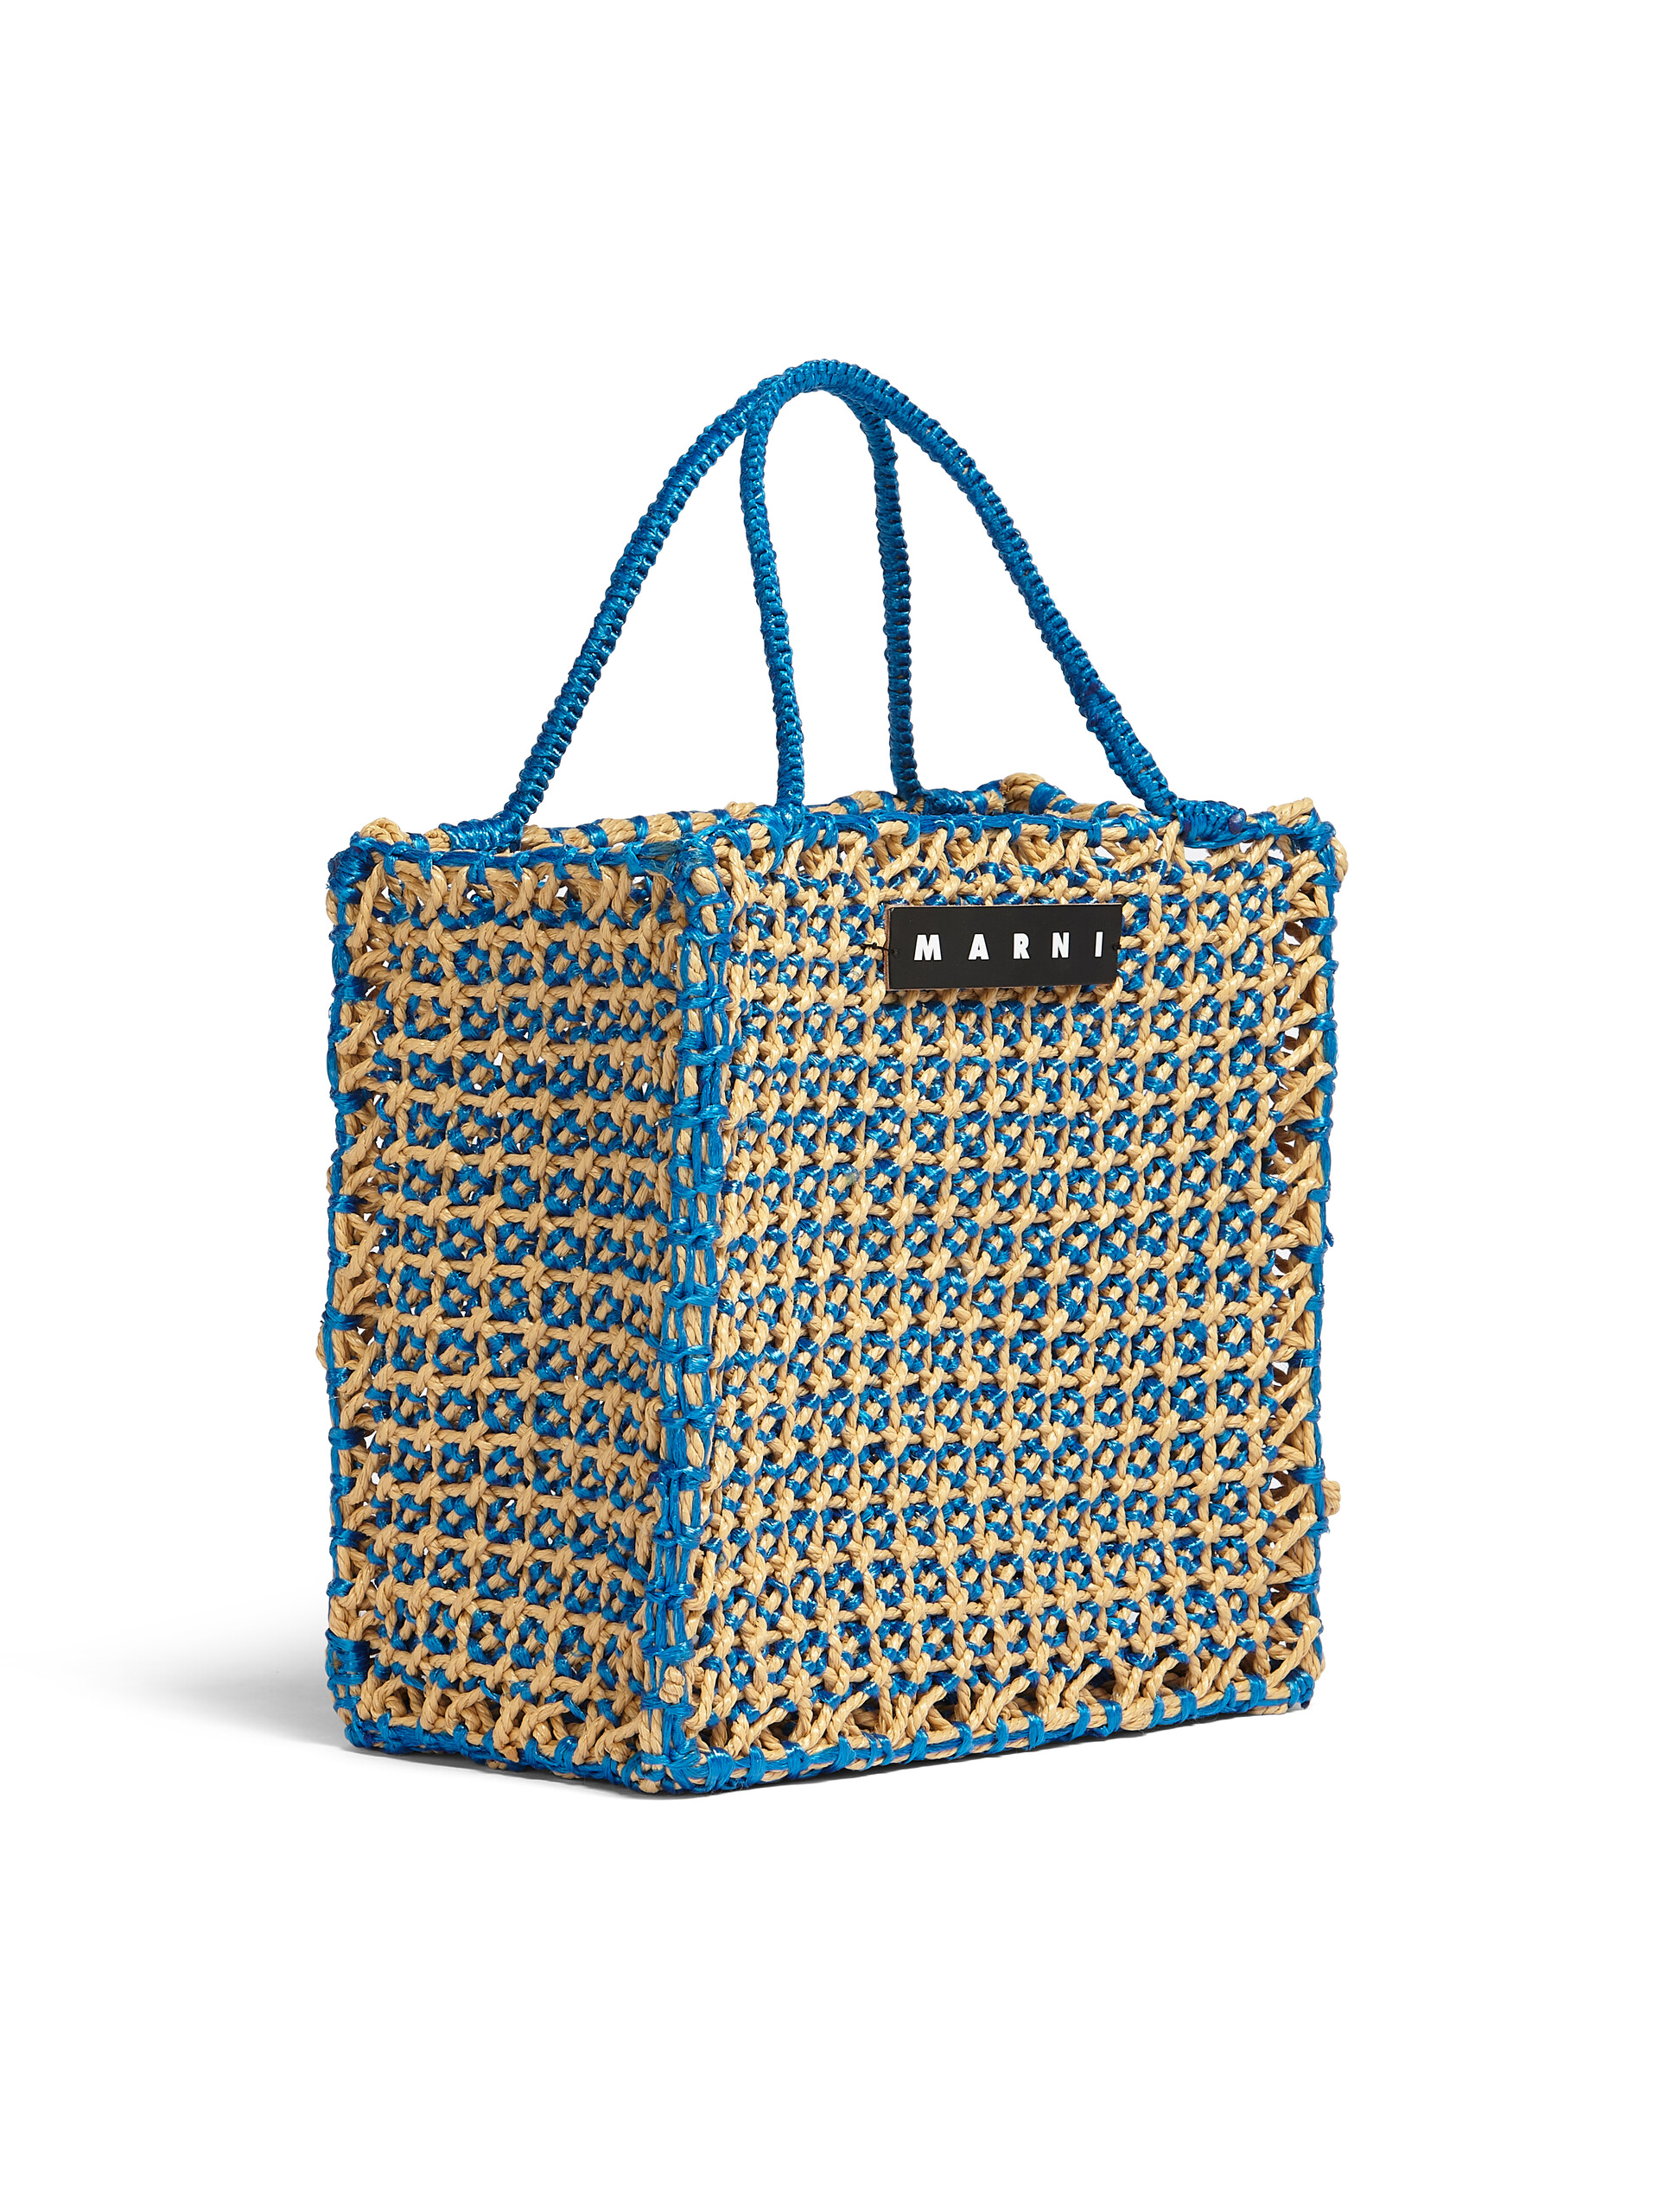 MARNI MARKET JURTA large bag in pale blue and beige crochet - Bags - Image 2